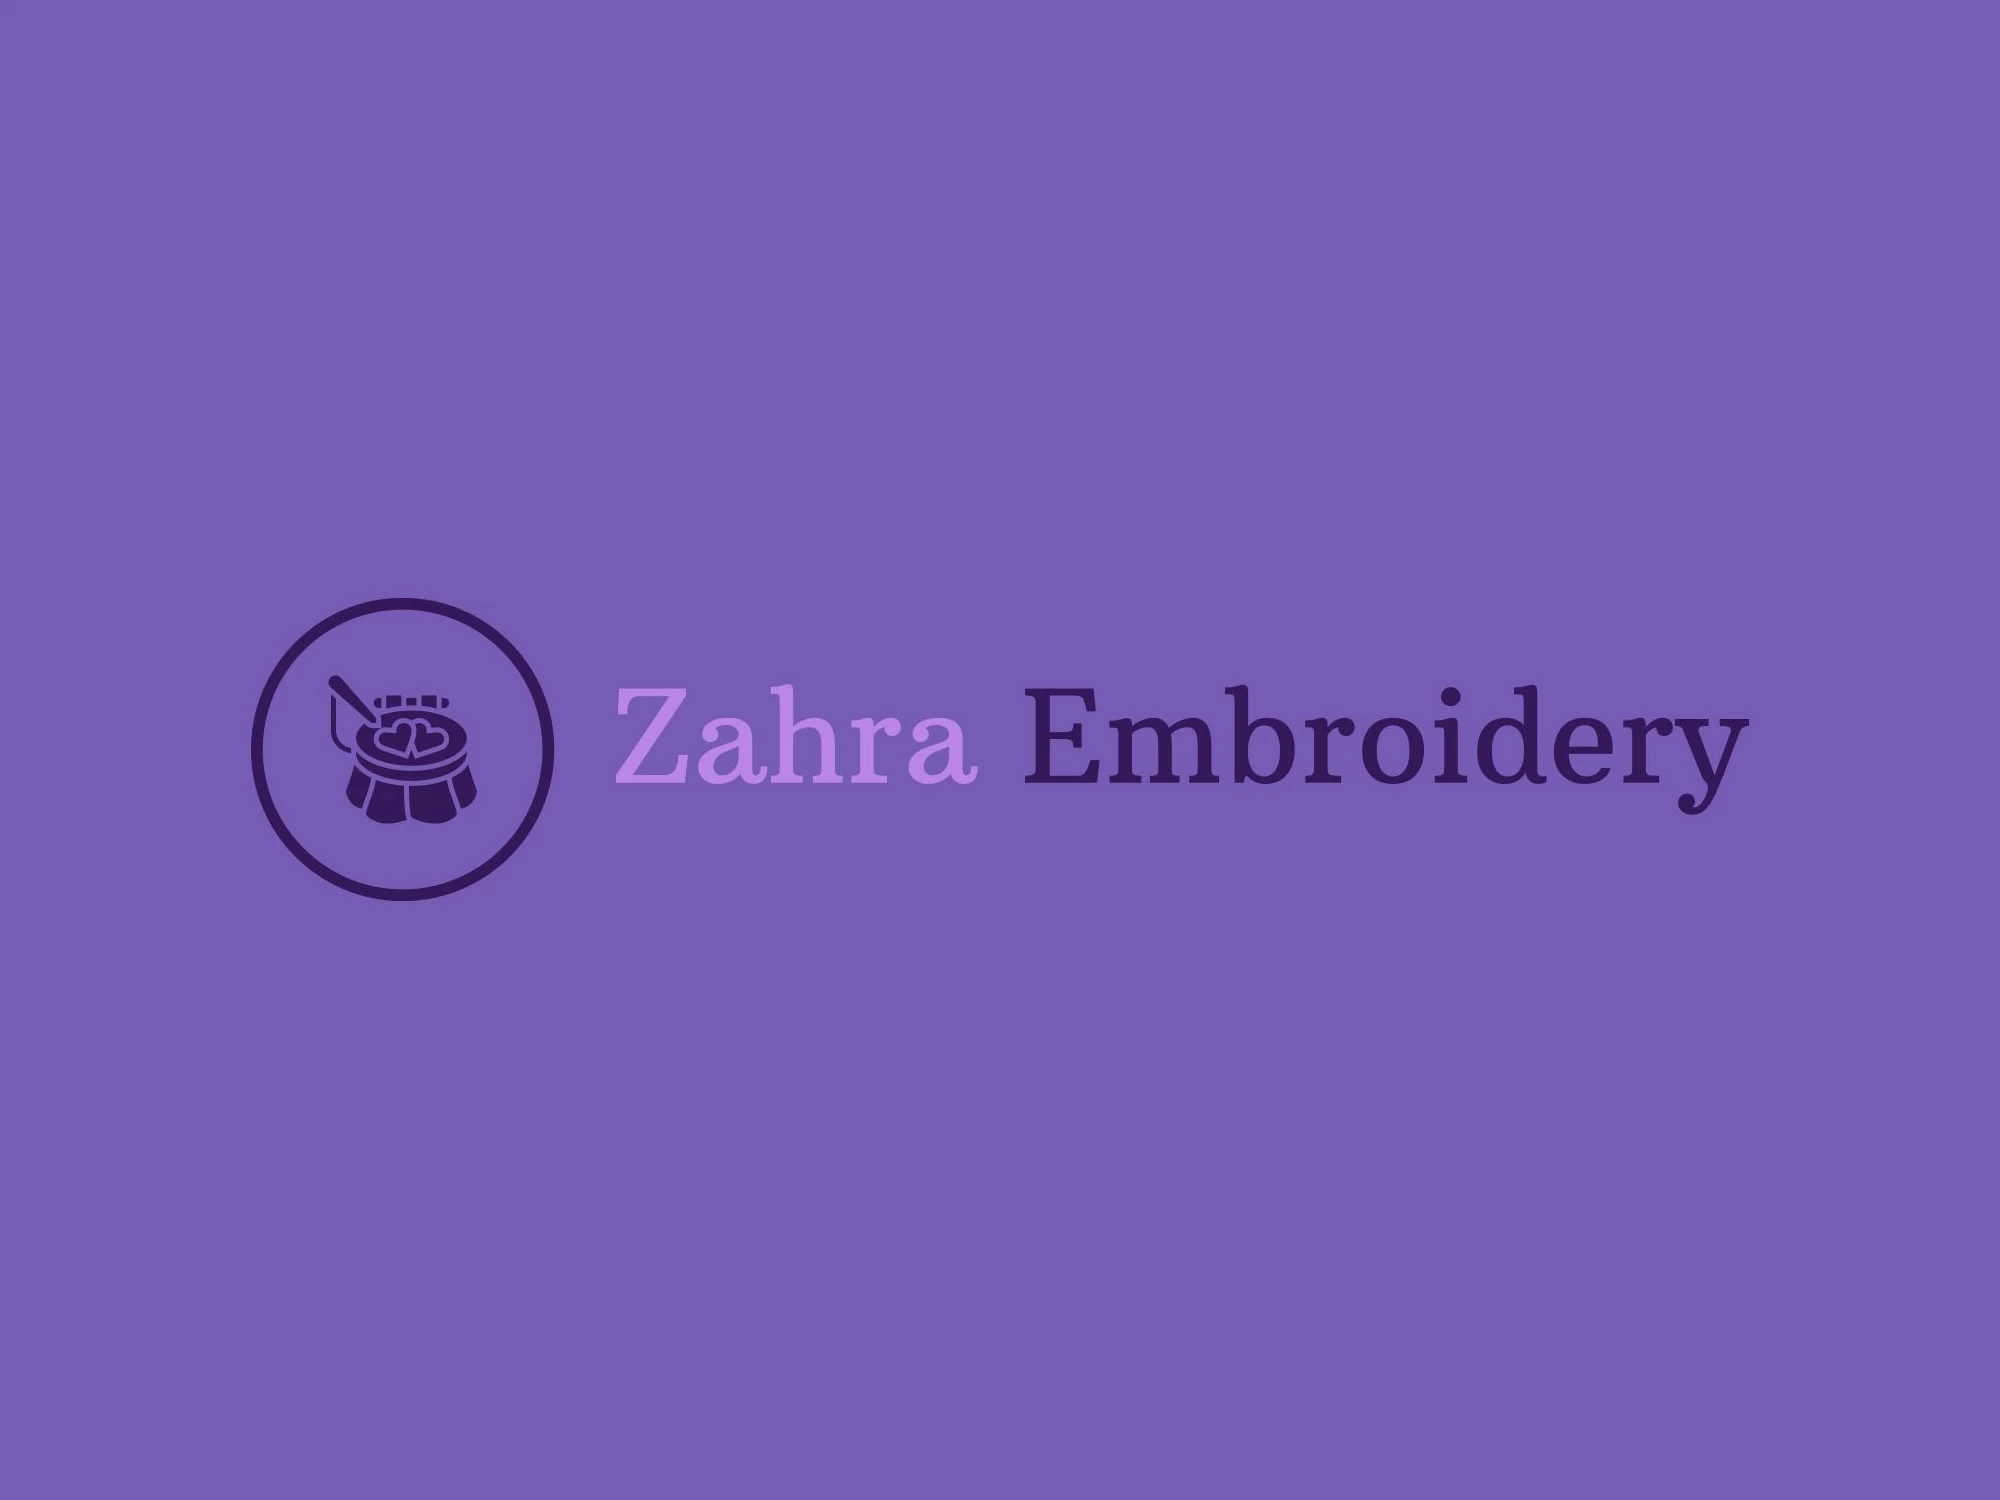 Zahra Embroidery